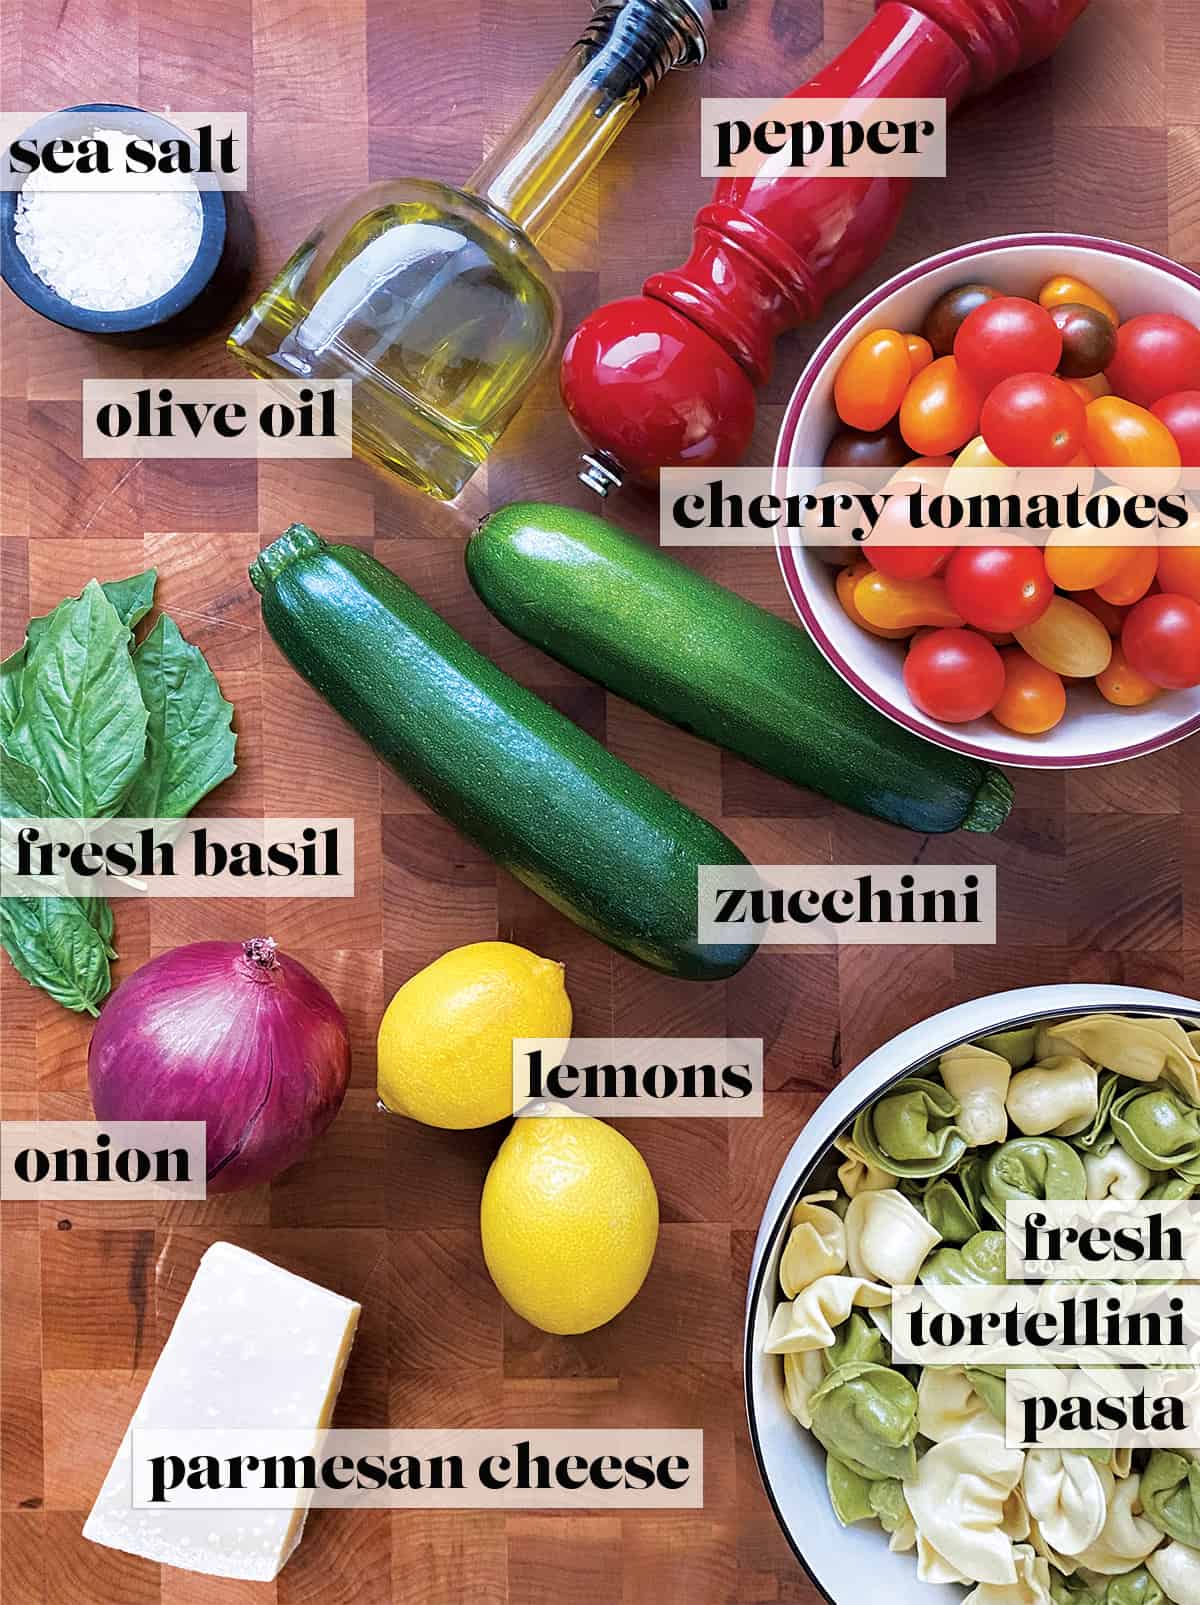 Ingredients for a tortellini pasta salad.